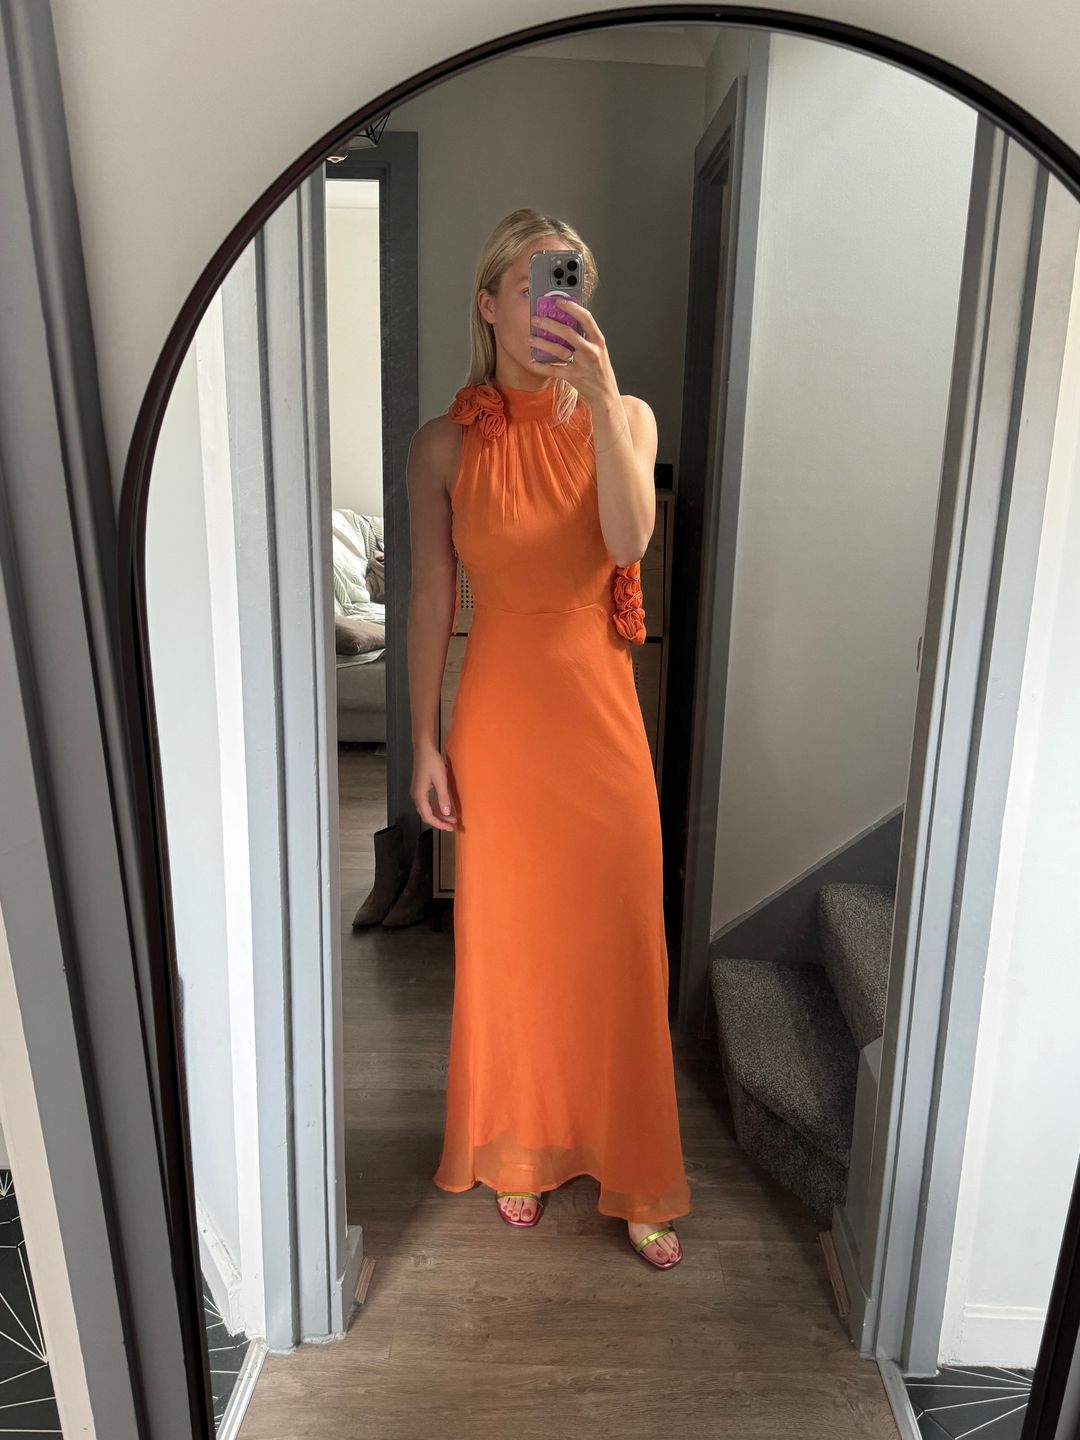 Myself wearing an orange maxi dress